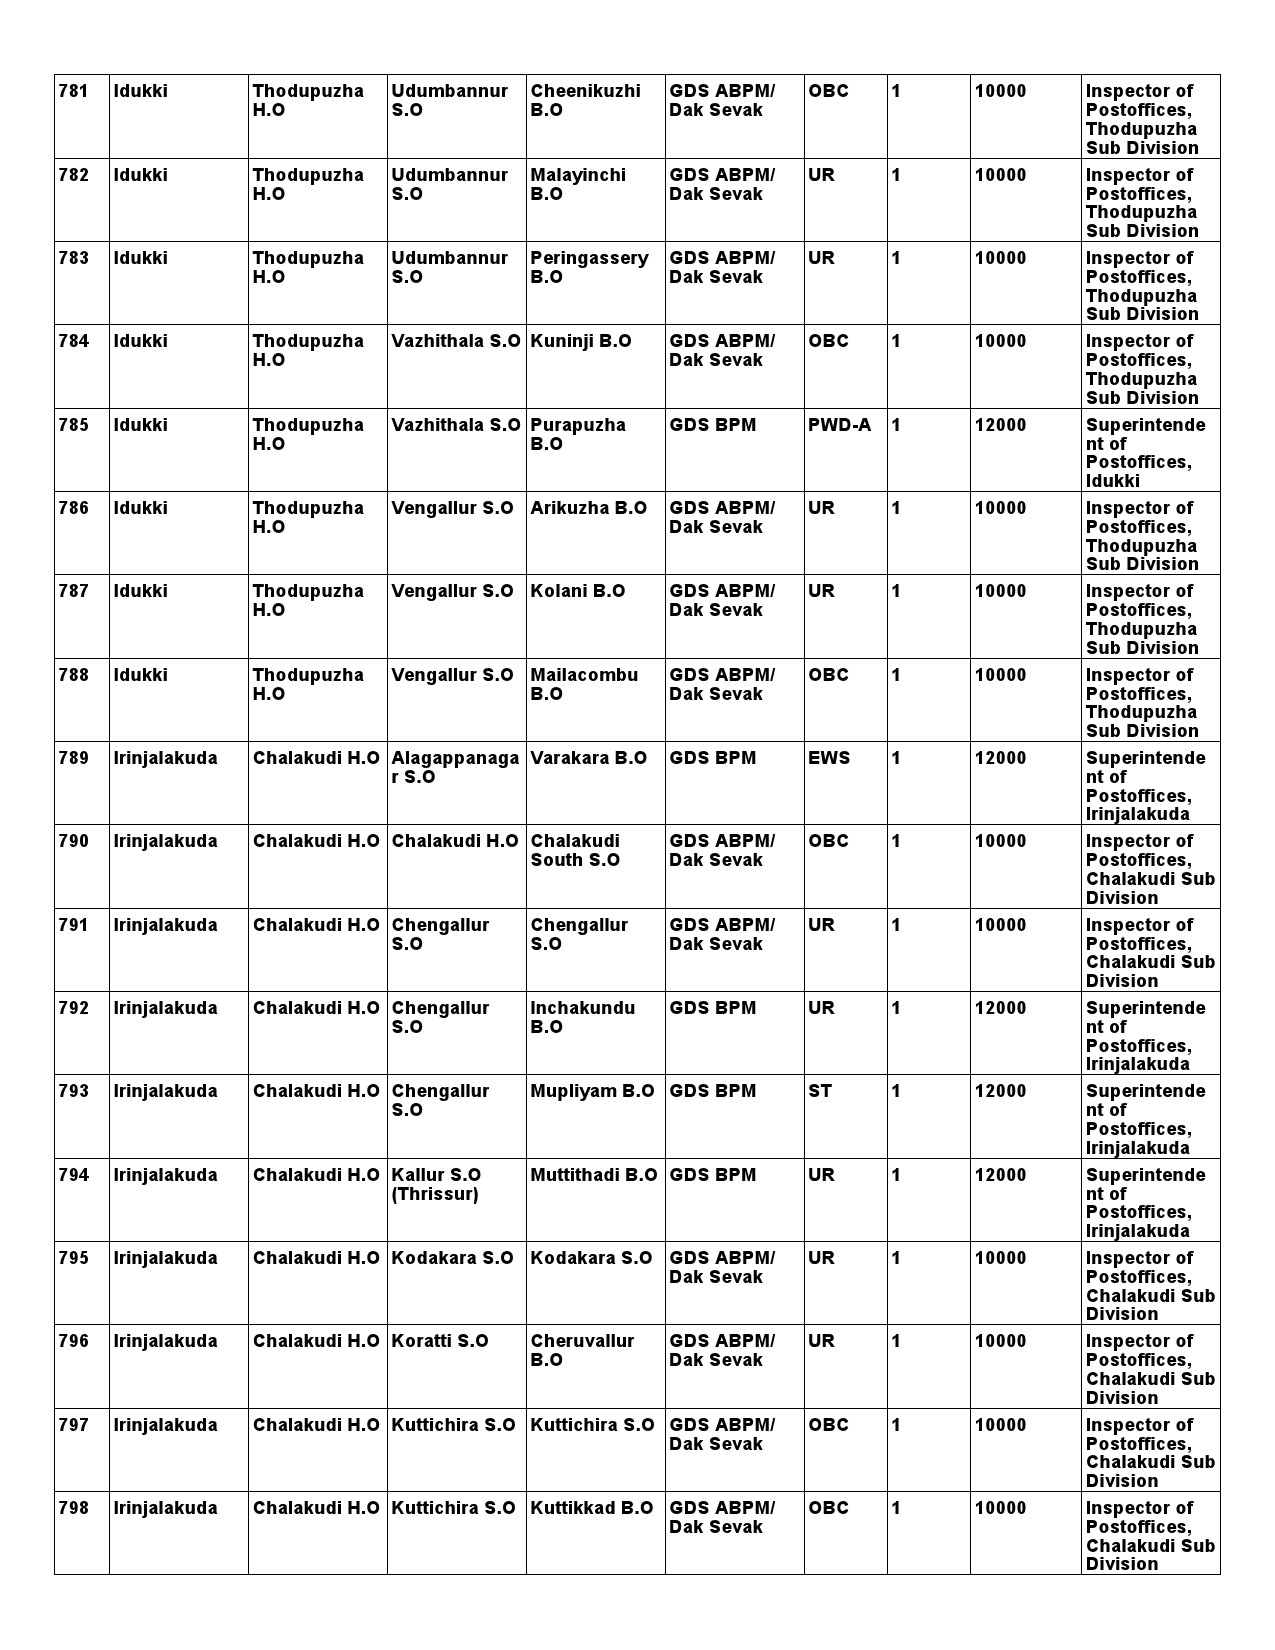 Kerala Postal Circle GDS Recruitment 2021 notification - Notification Image 70